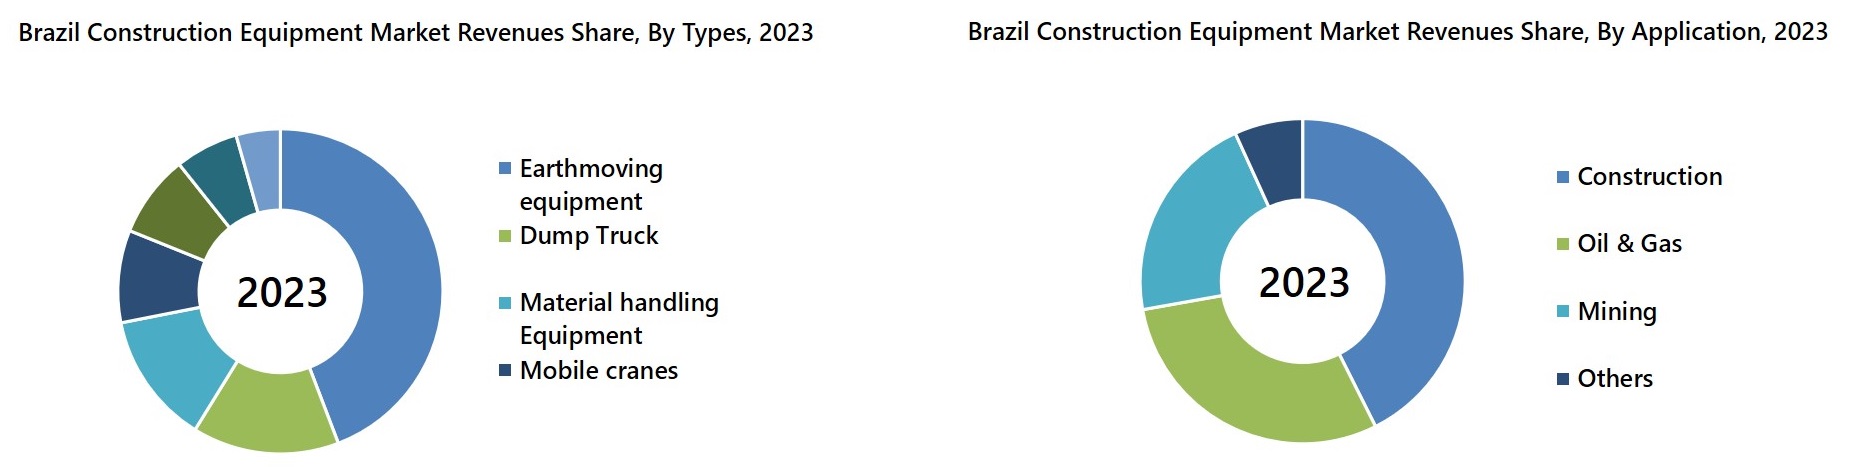 Brazil Construction Equipment Market 